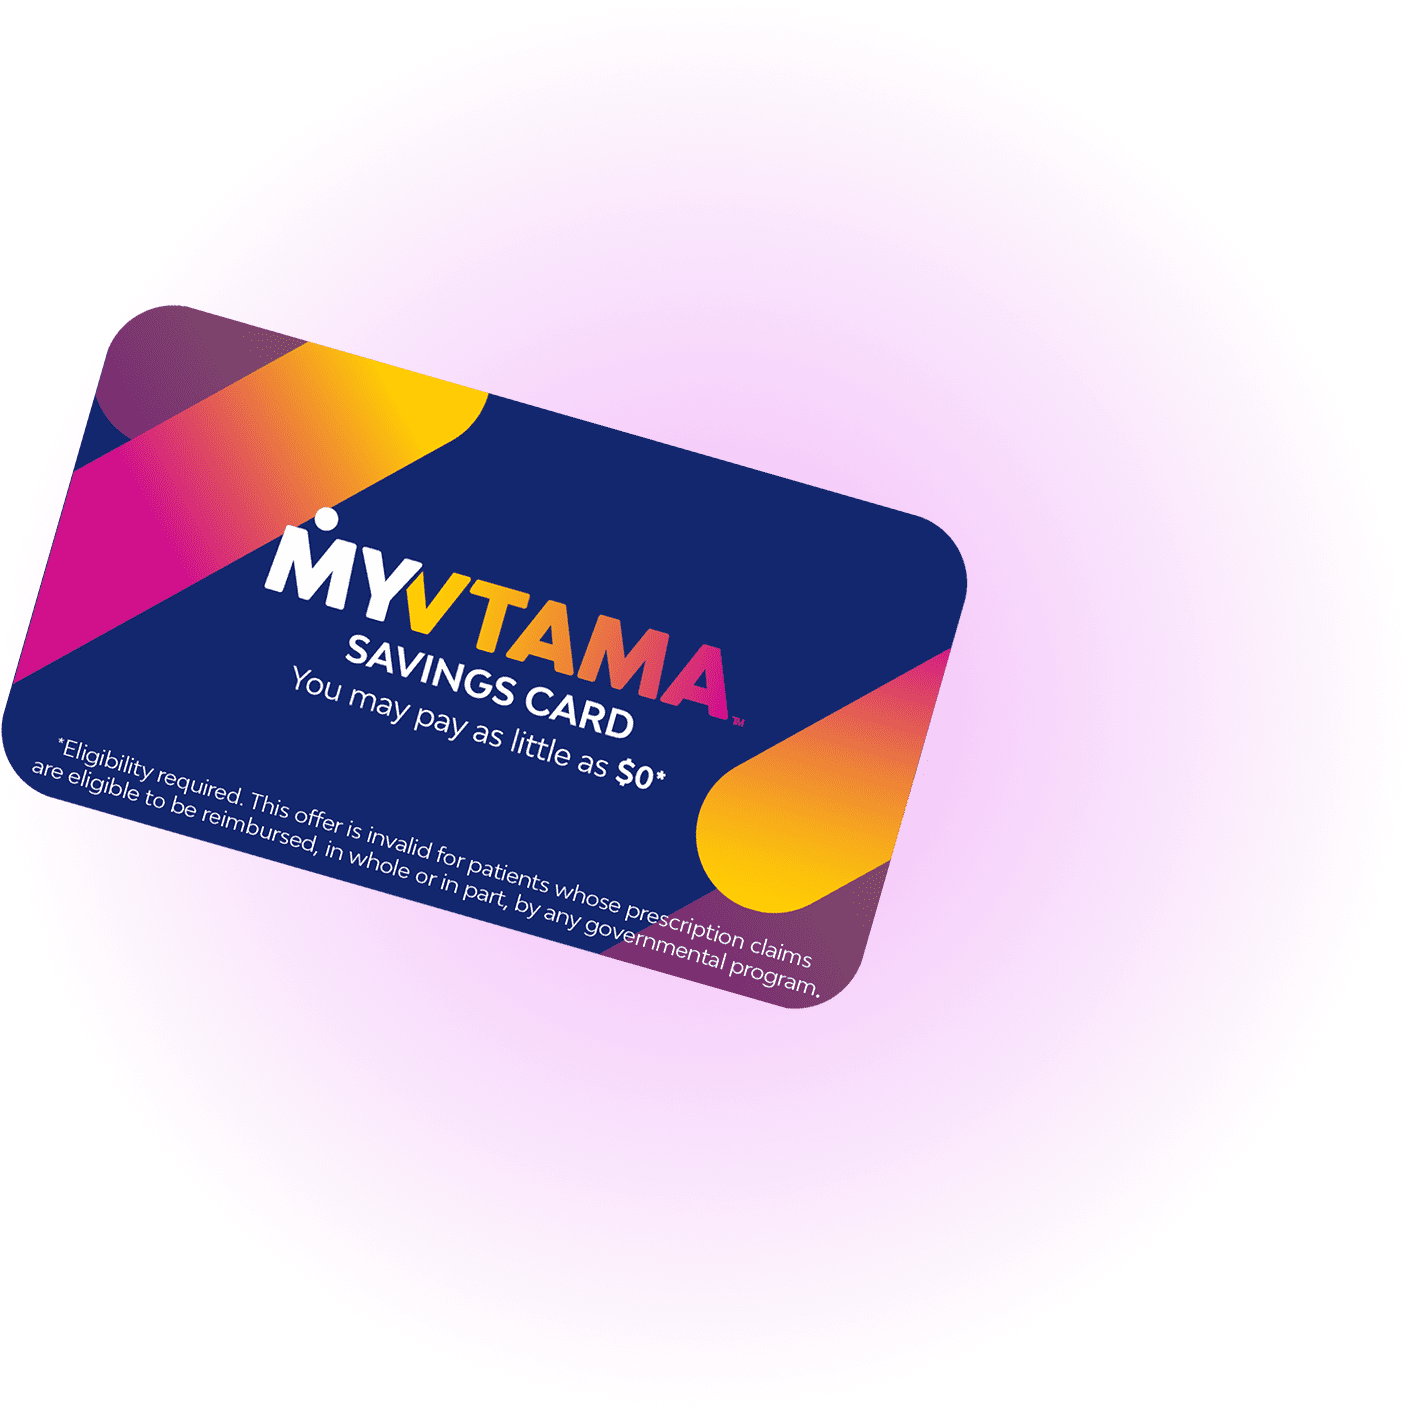 MyVTAMA Savings Card